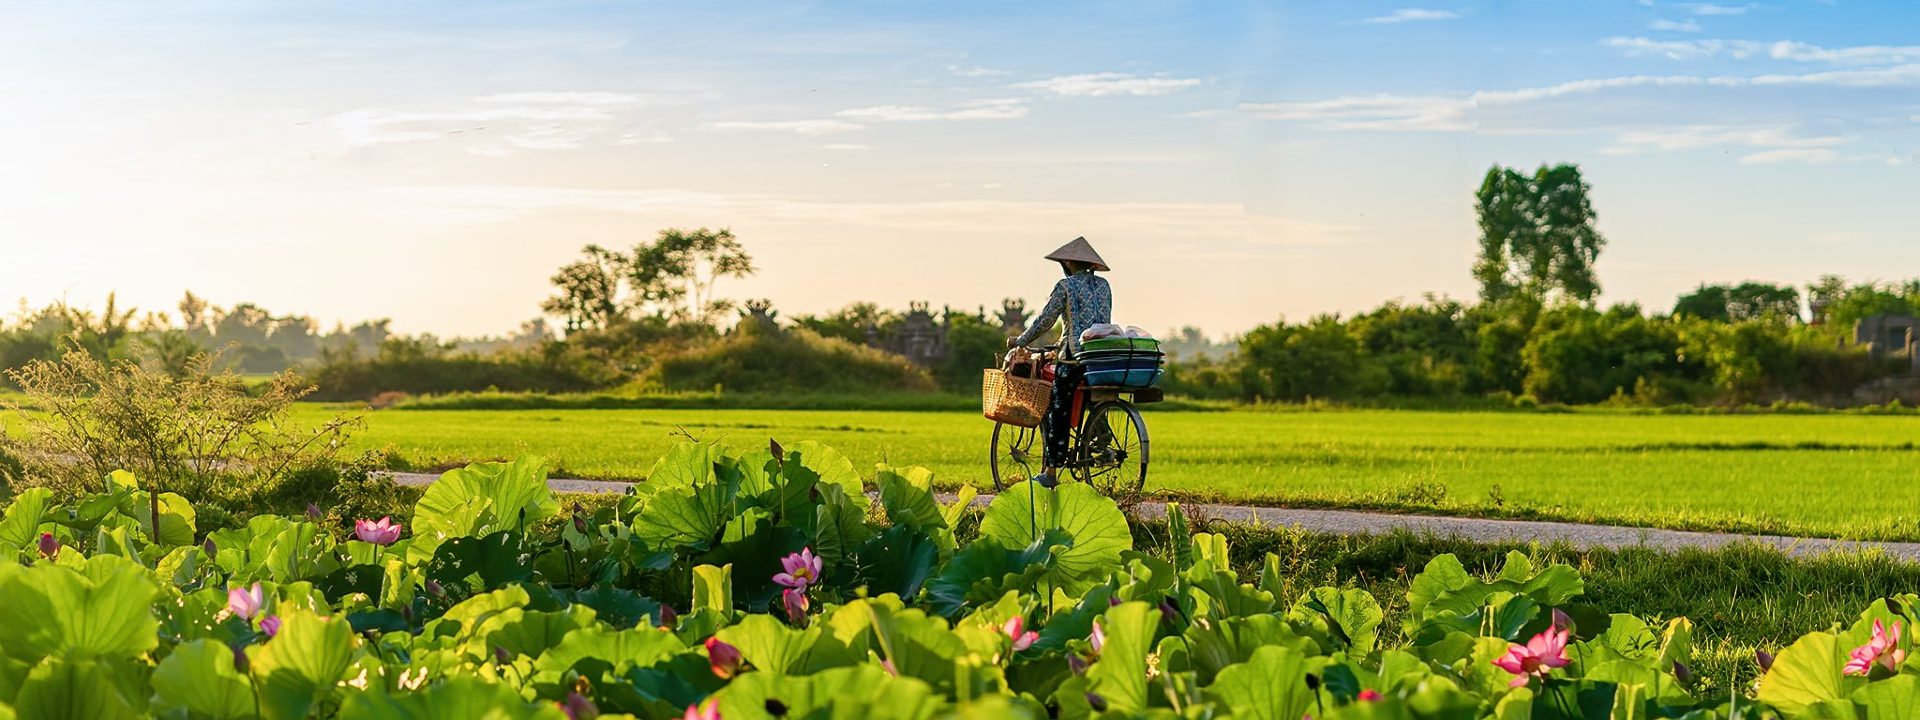 Ruta clásica del Sur al Norte de Vietnam